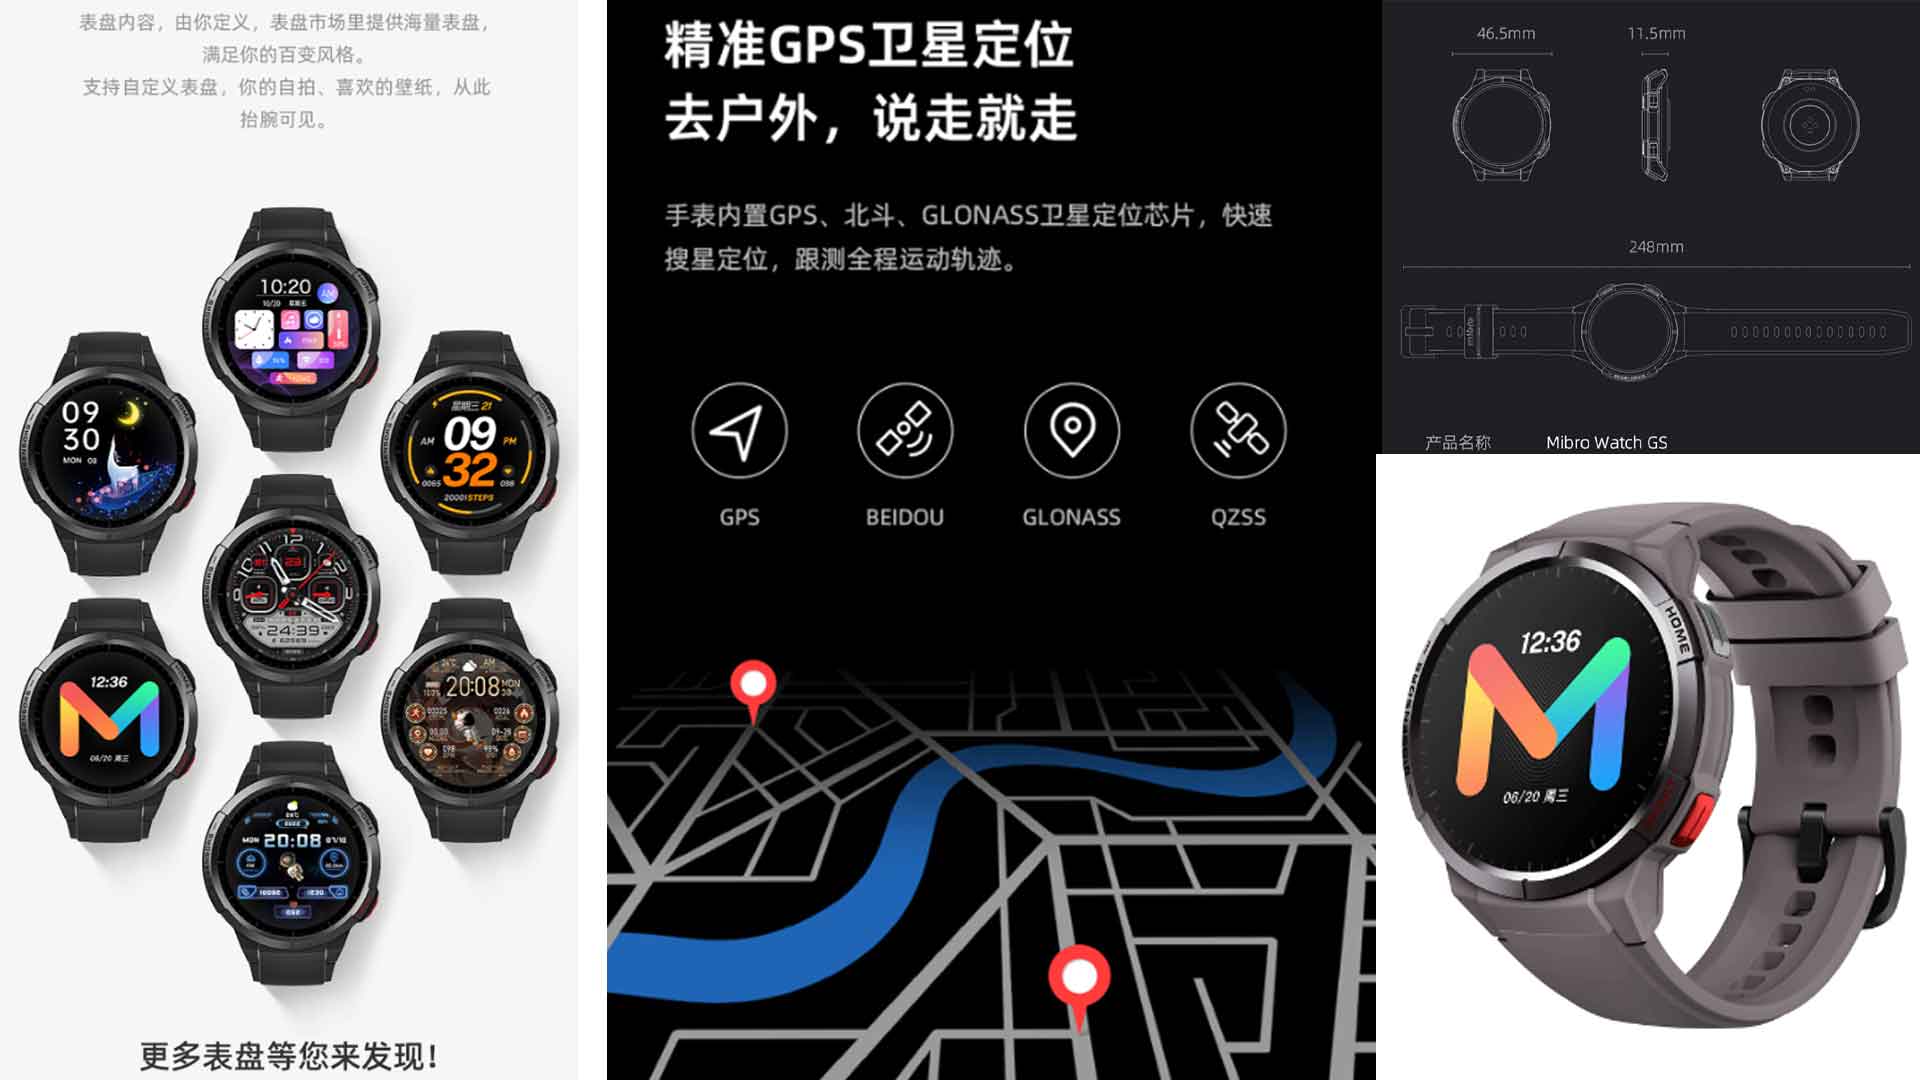 Mibro Watch GS, Mibro Watch GS review, Mibro Watch GS price, Mibro, Mibro watch, Mibro smartwatch, sports smartwatch, activity tracker